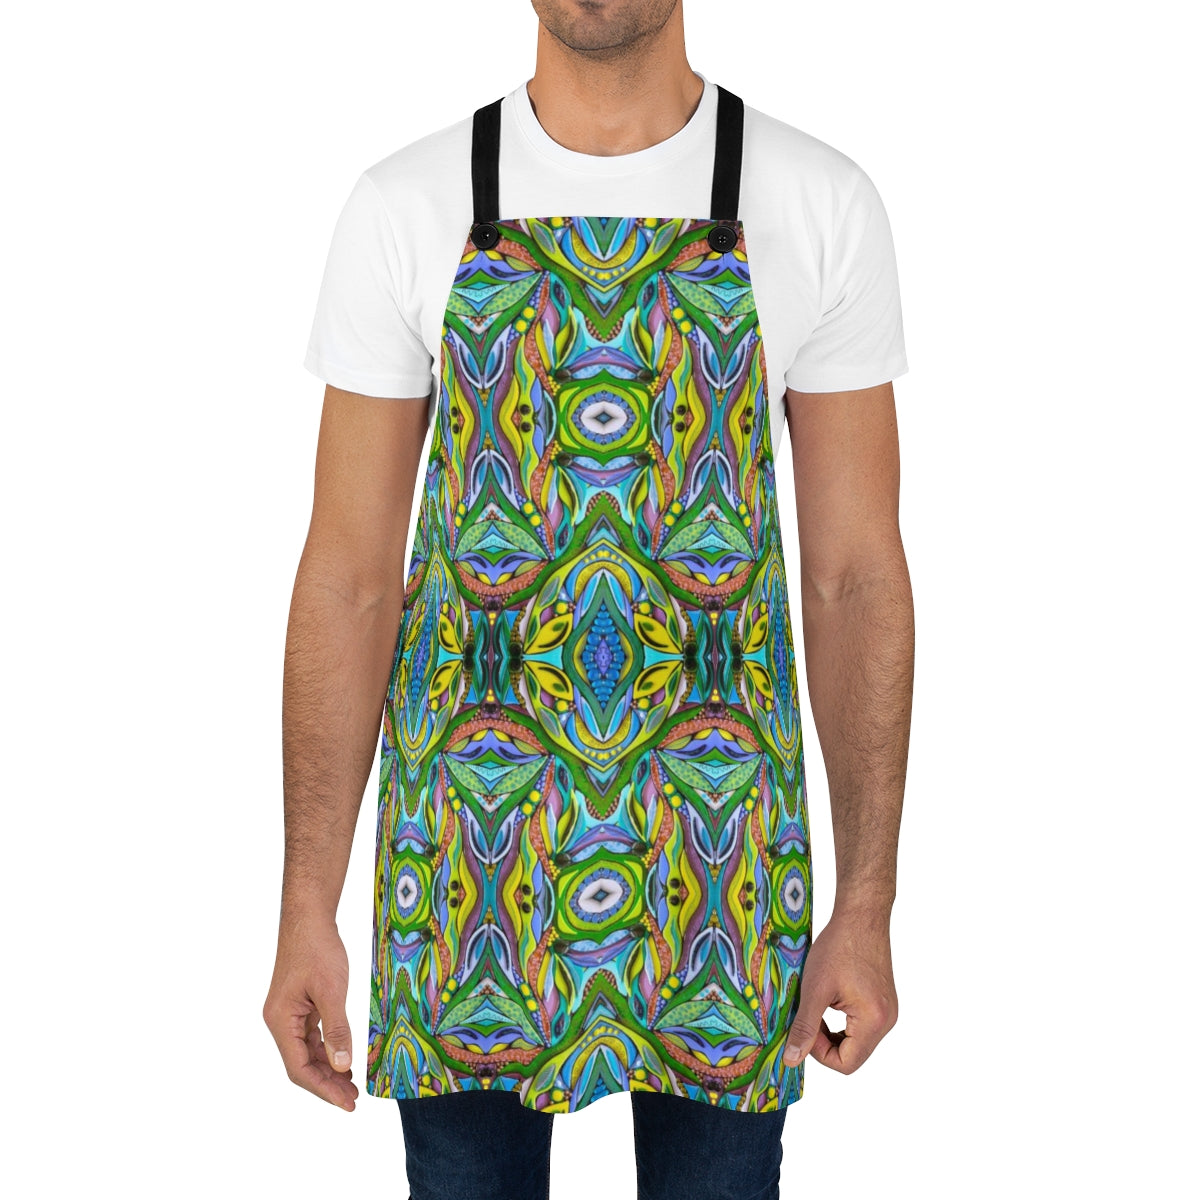 Fun designer apron shown on a man